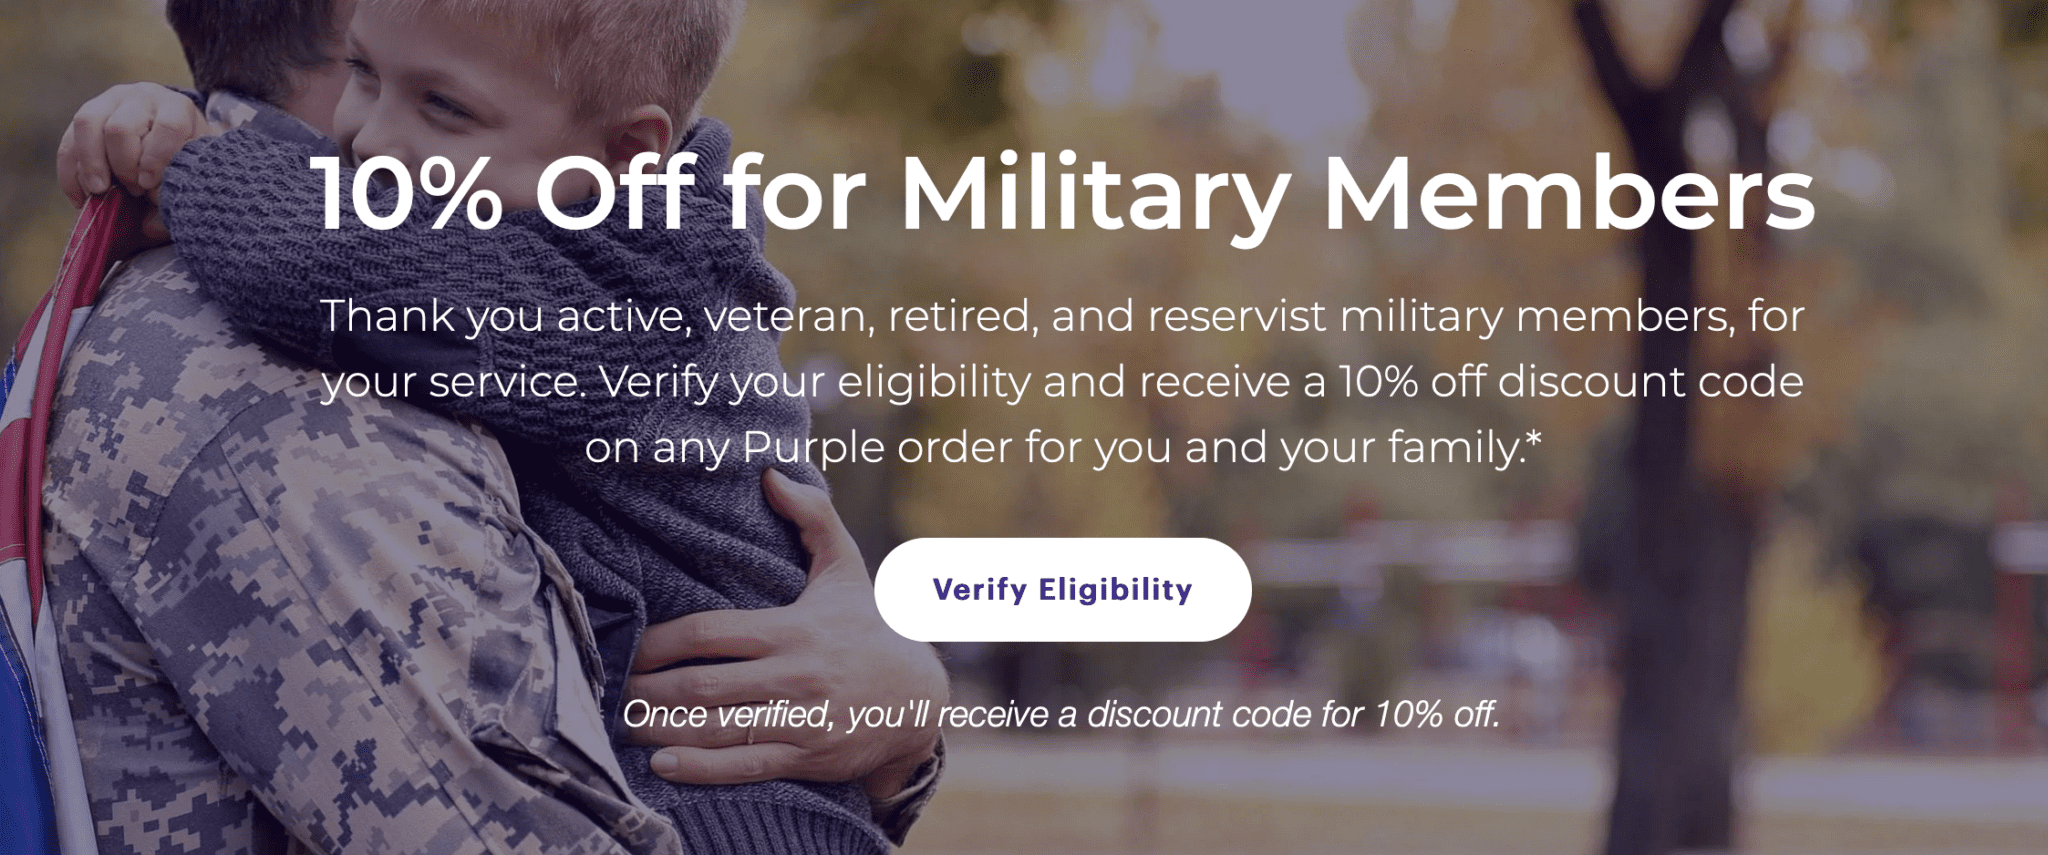 purple mattress location military discount code